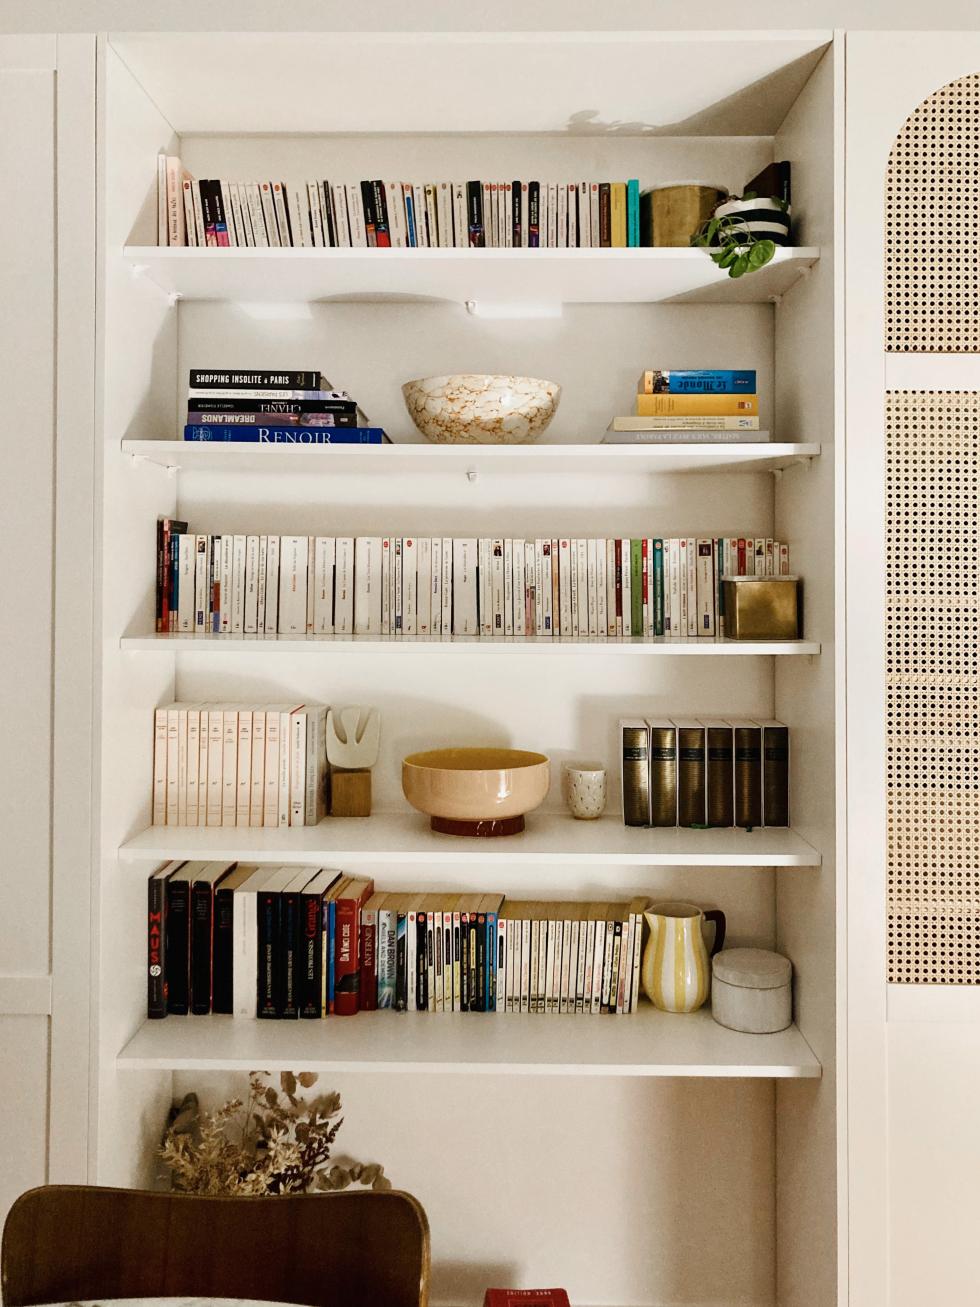 Aurélie's Blanc pur wardrobe-bookcase